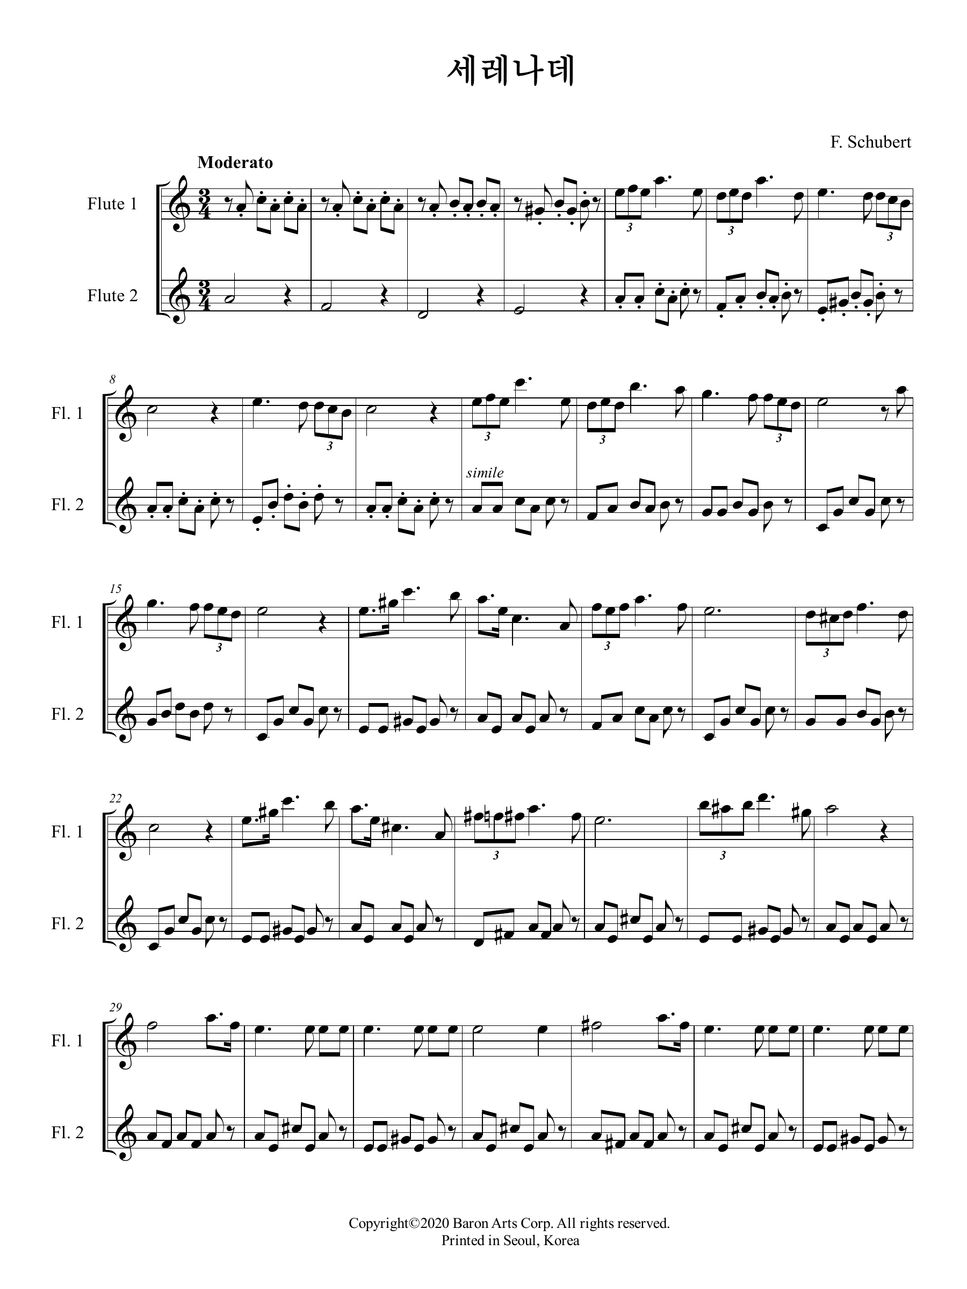 F. Schubert - Serenade by Baron Arts7